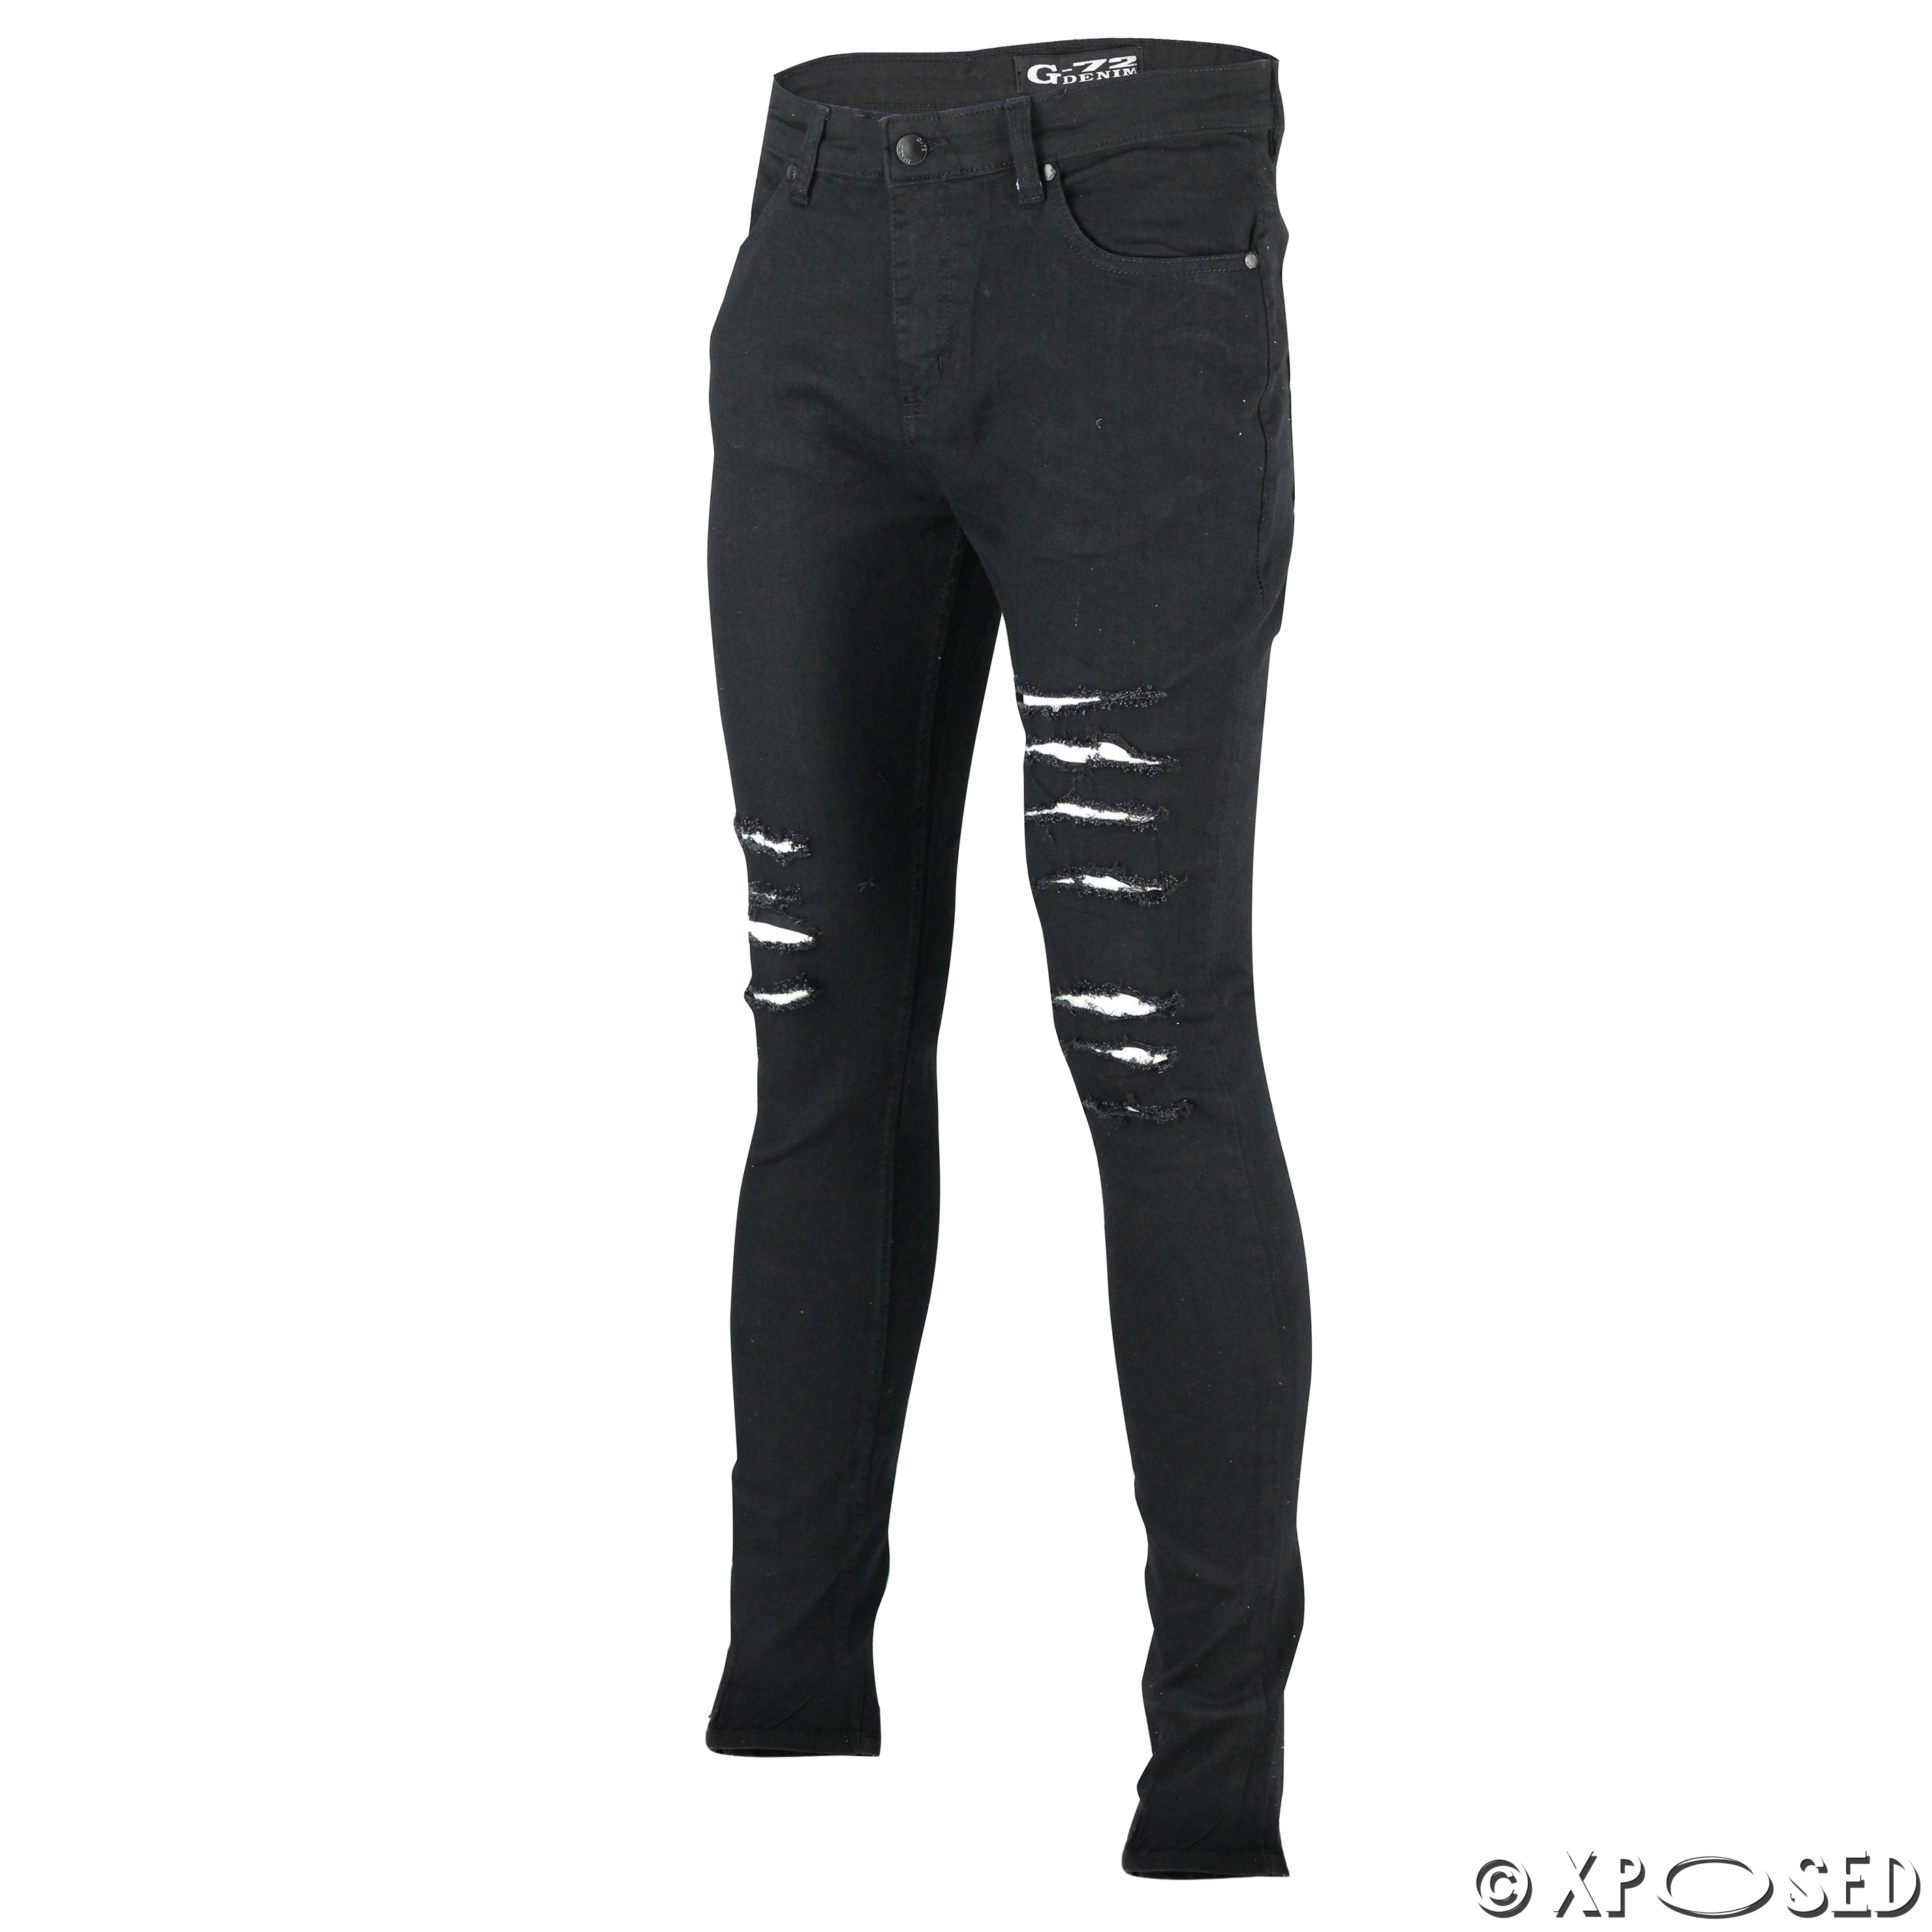 Mens New Black Blue G72 Super Stretch Ripped Skinny Slim Fit Denim Jeans Pants Ebay 1613